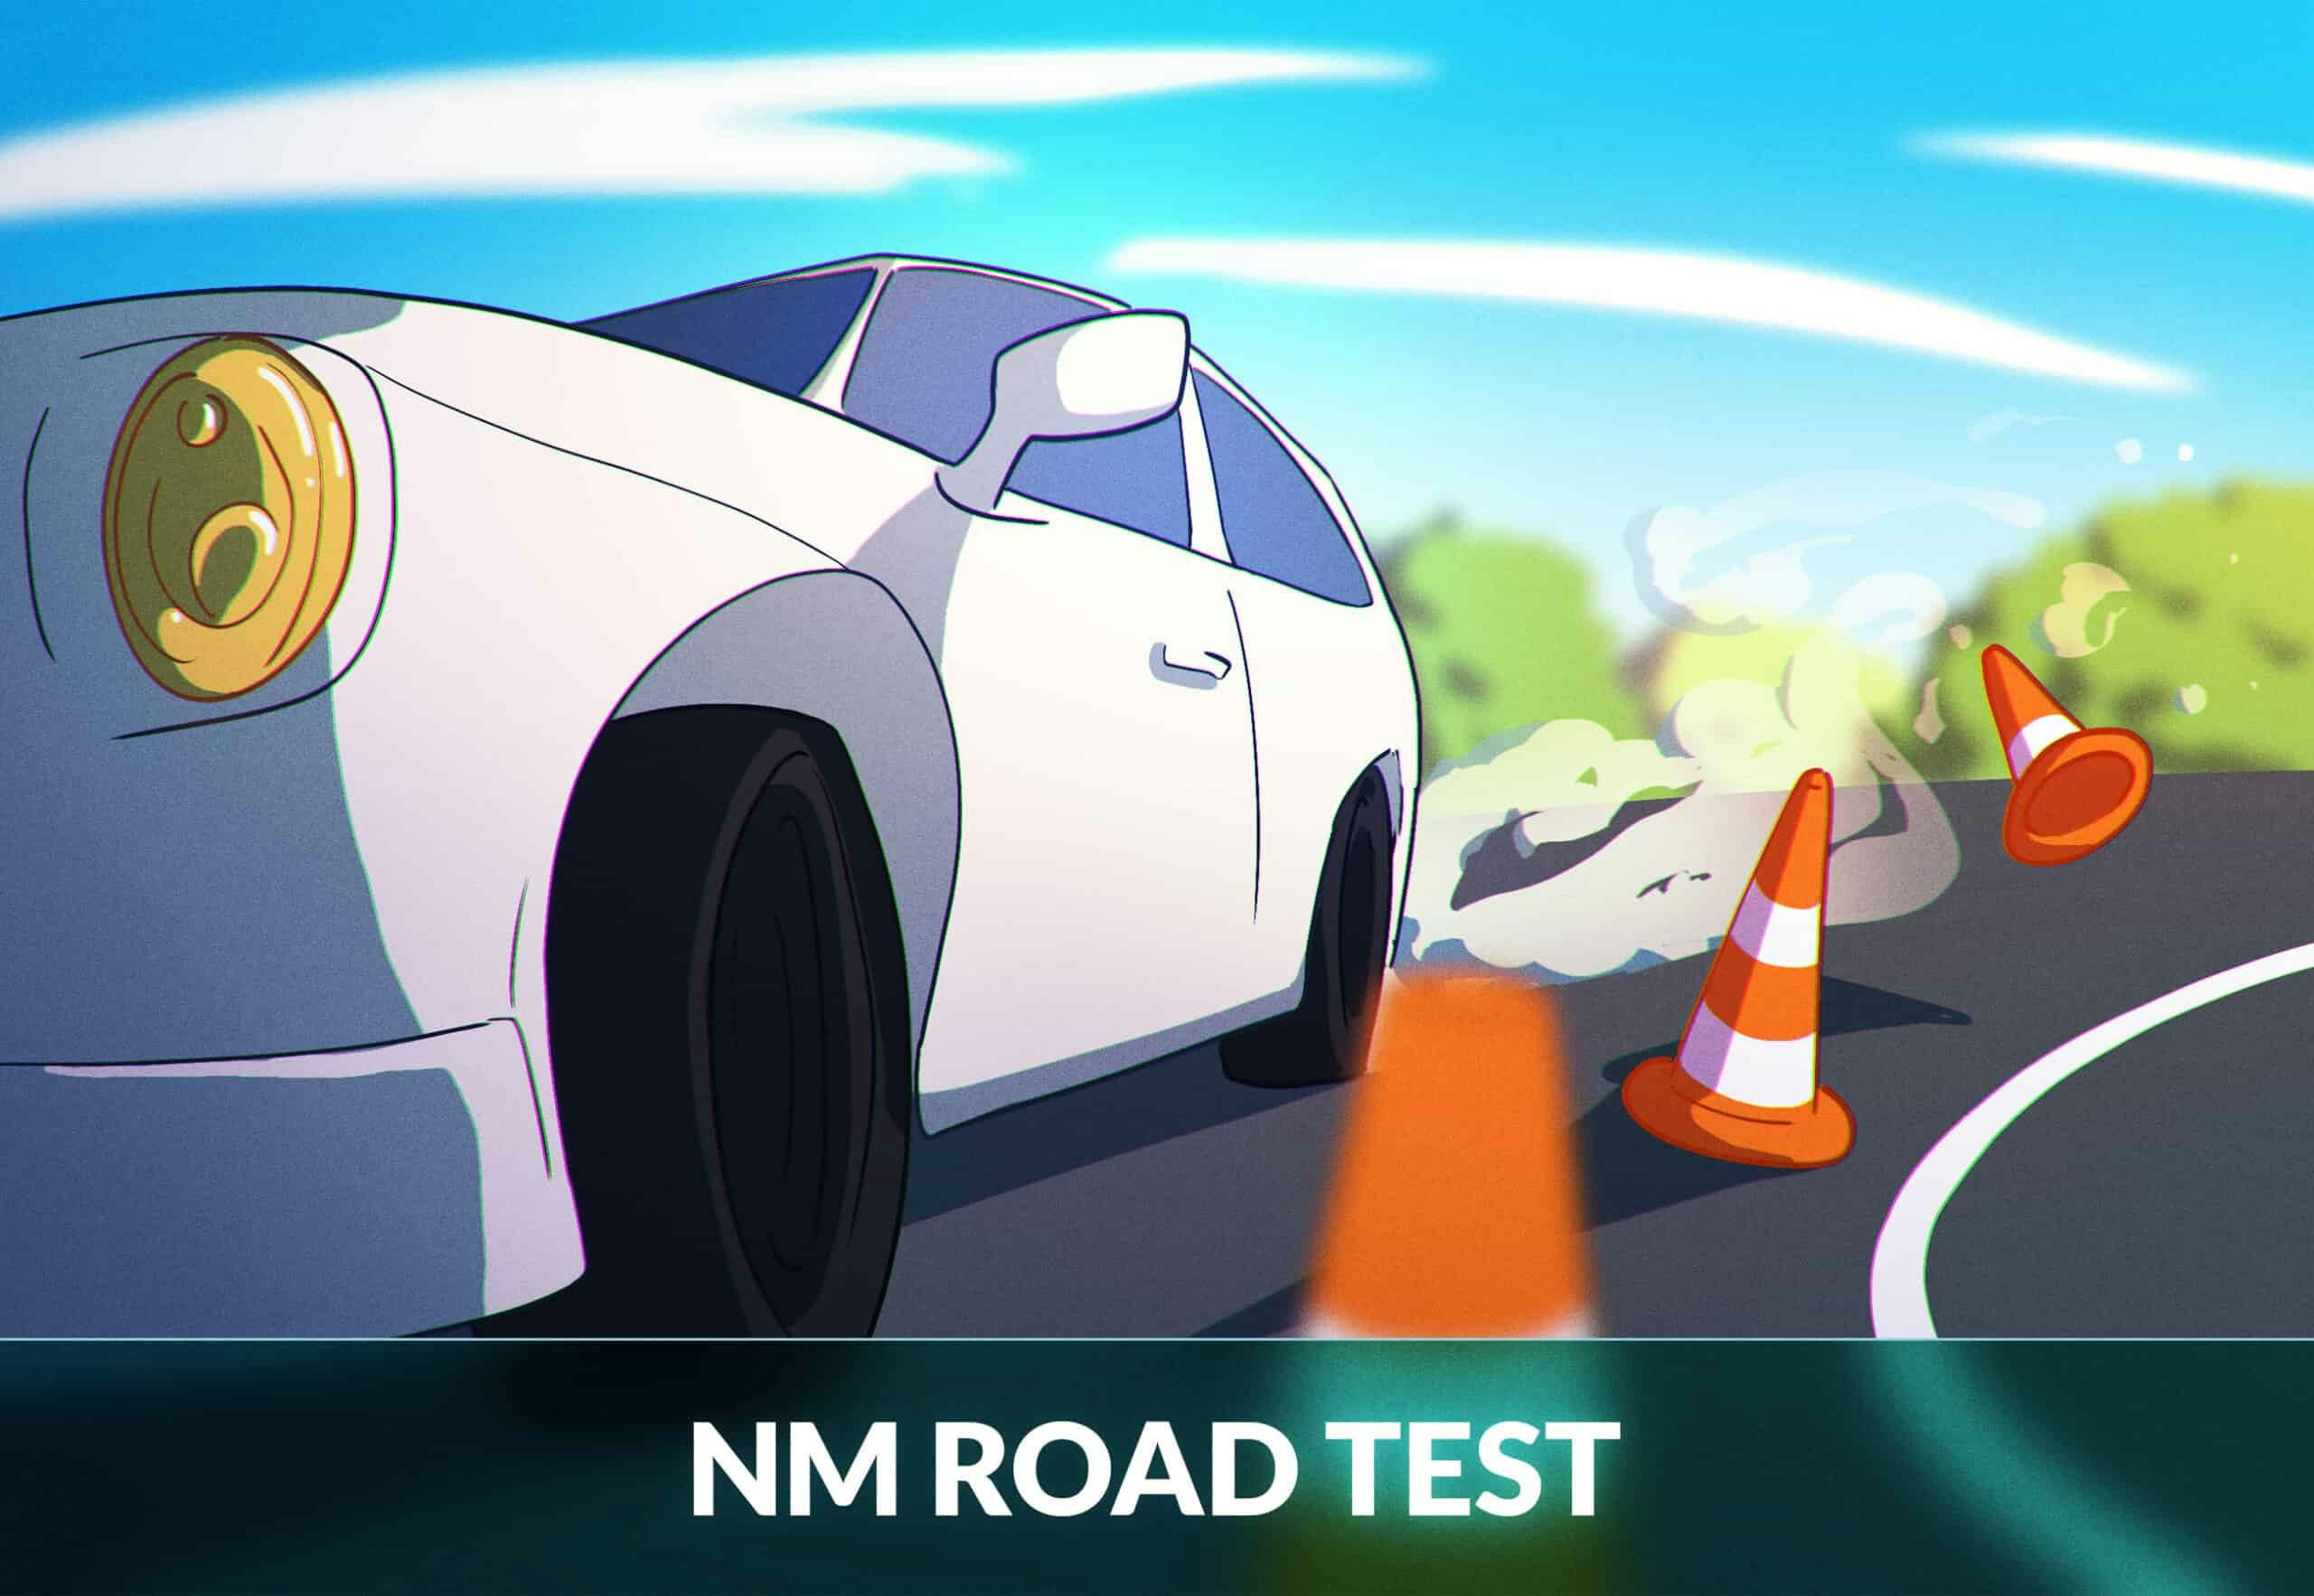 NM road test